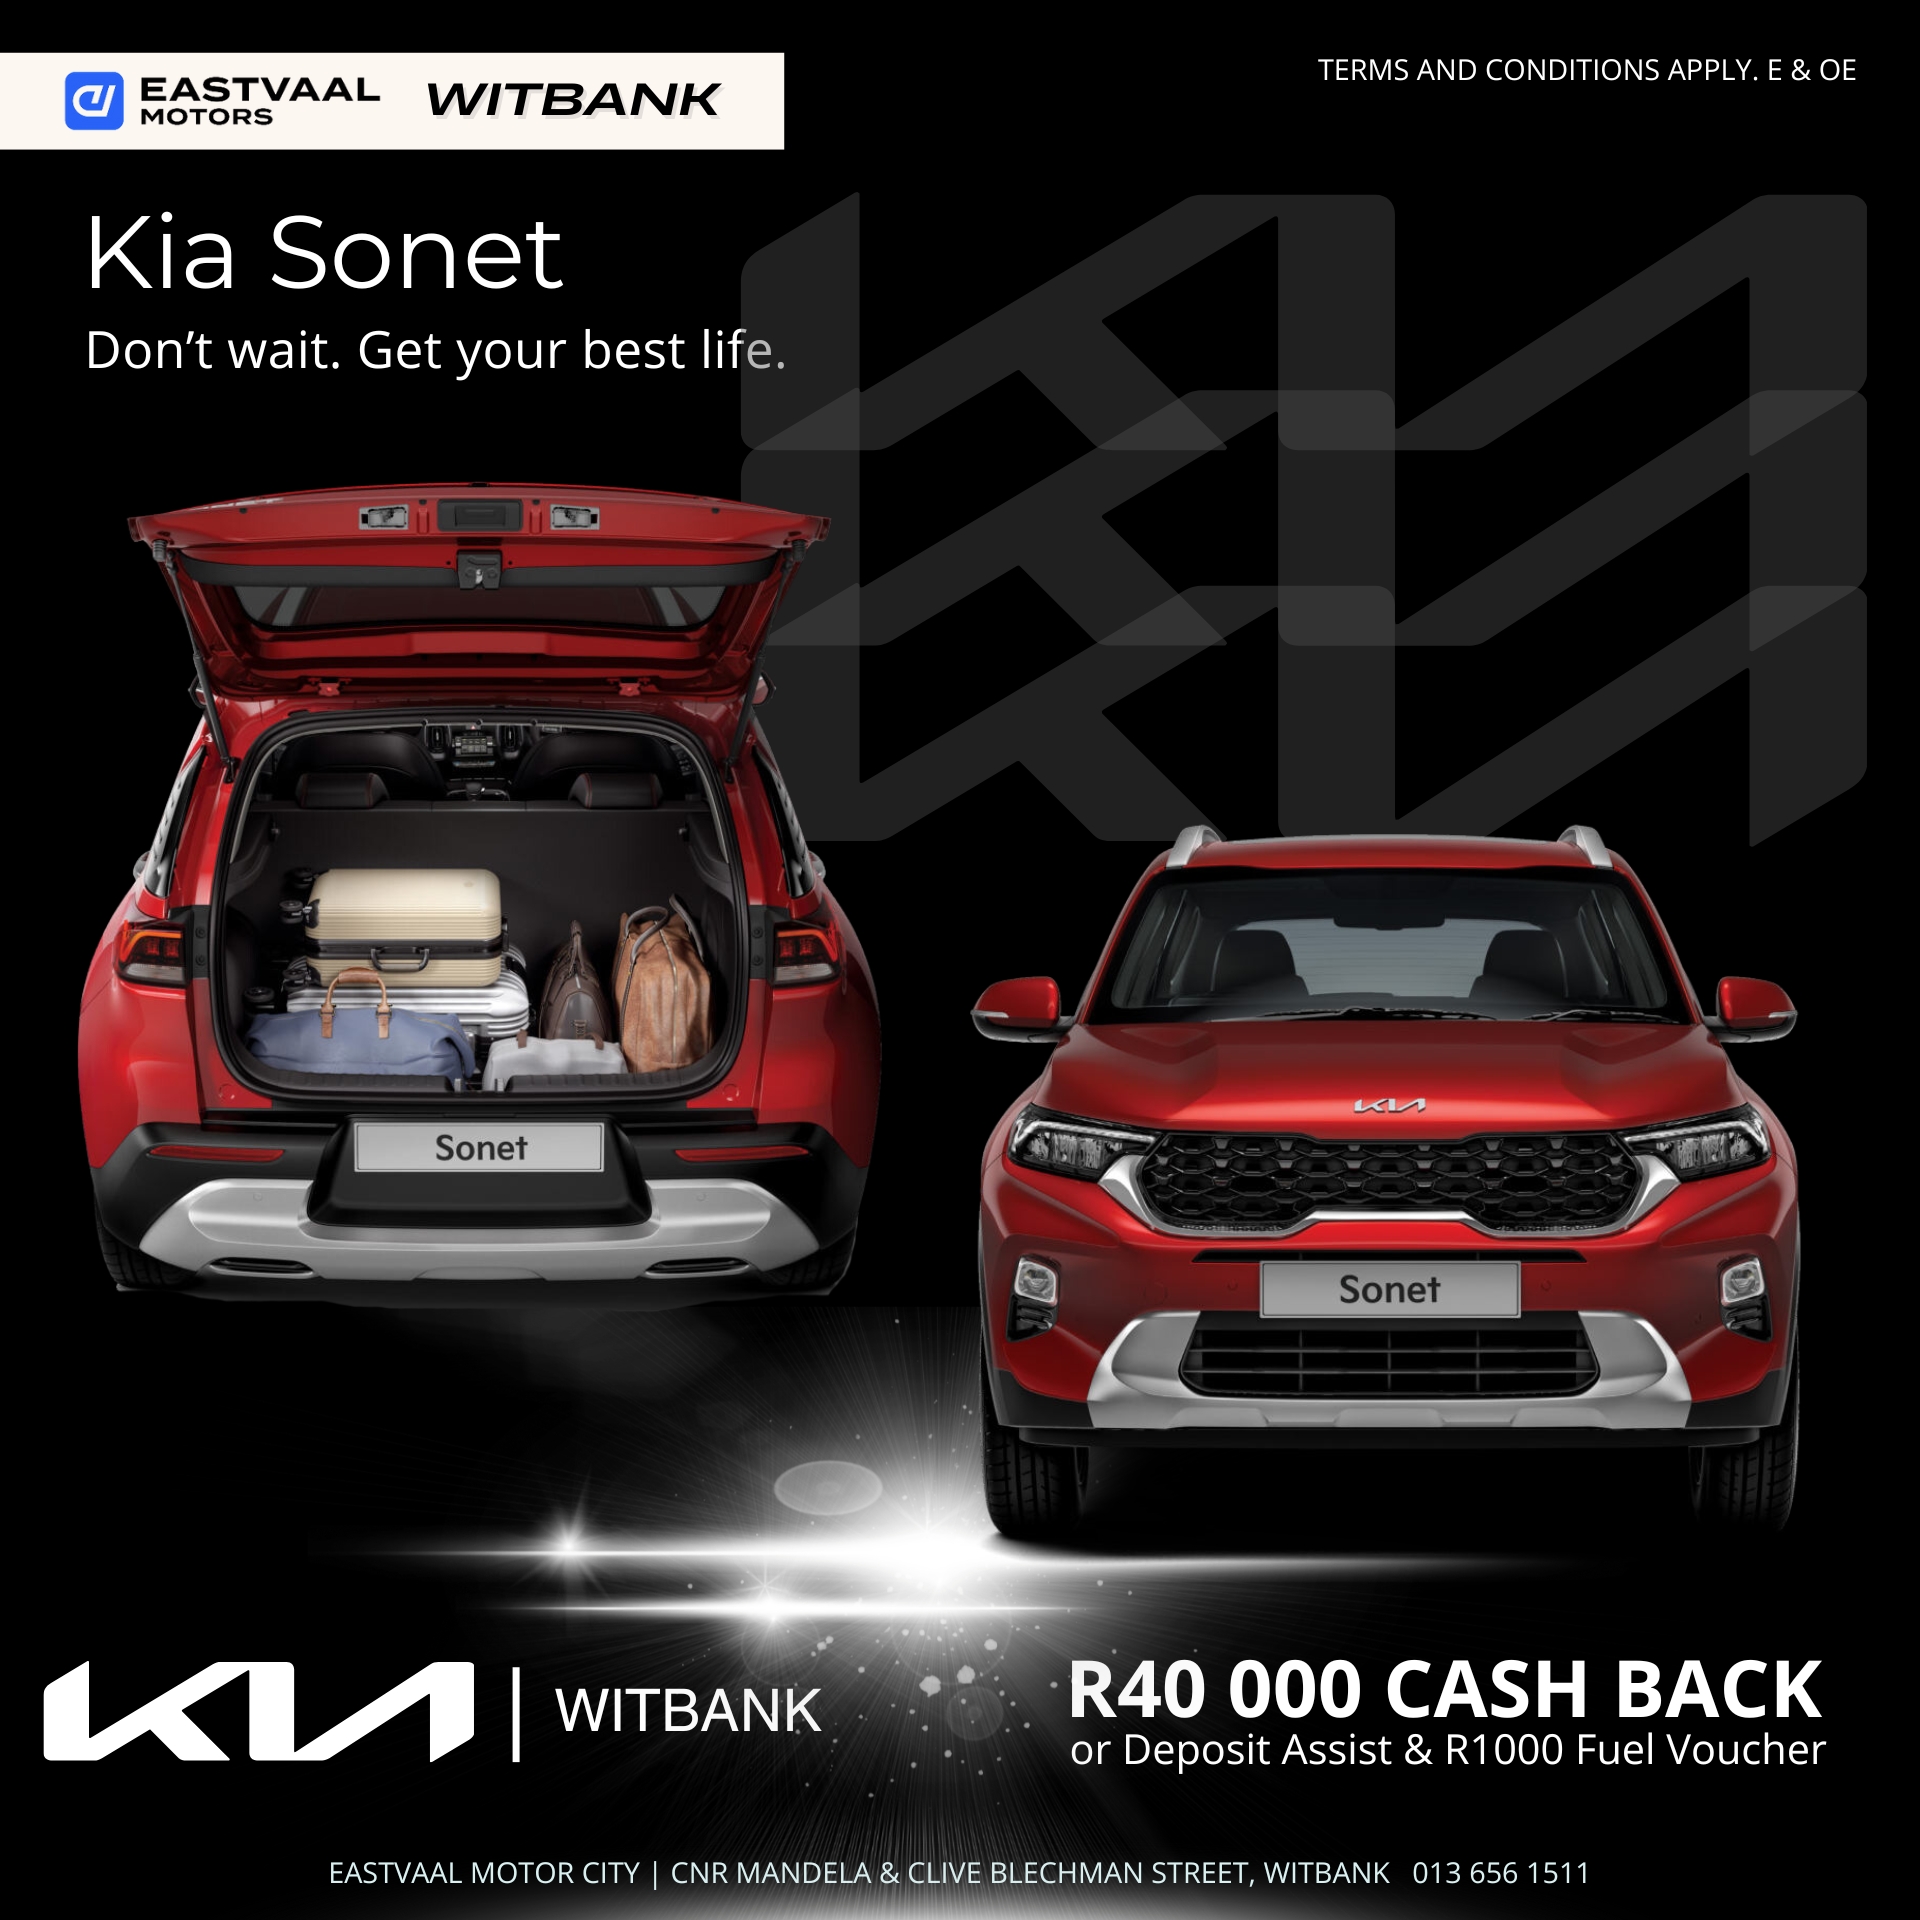 KIA SONET image from Eastvaal Motors